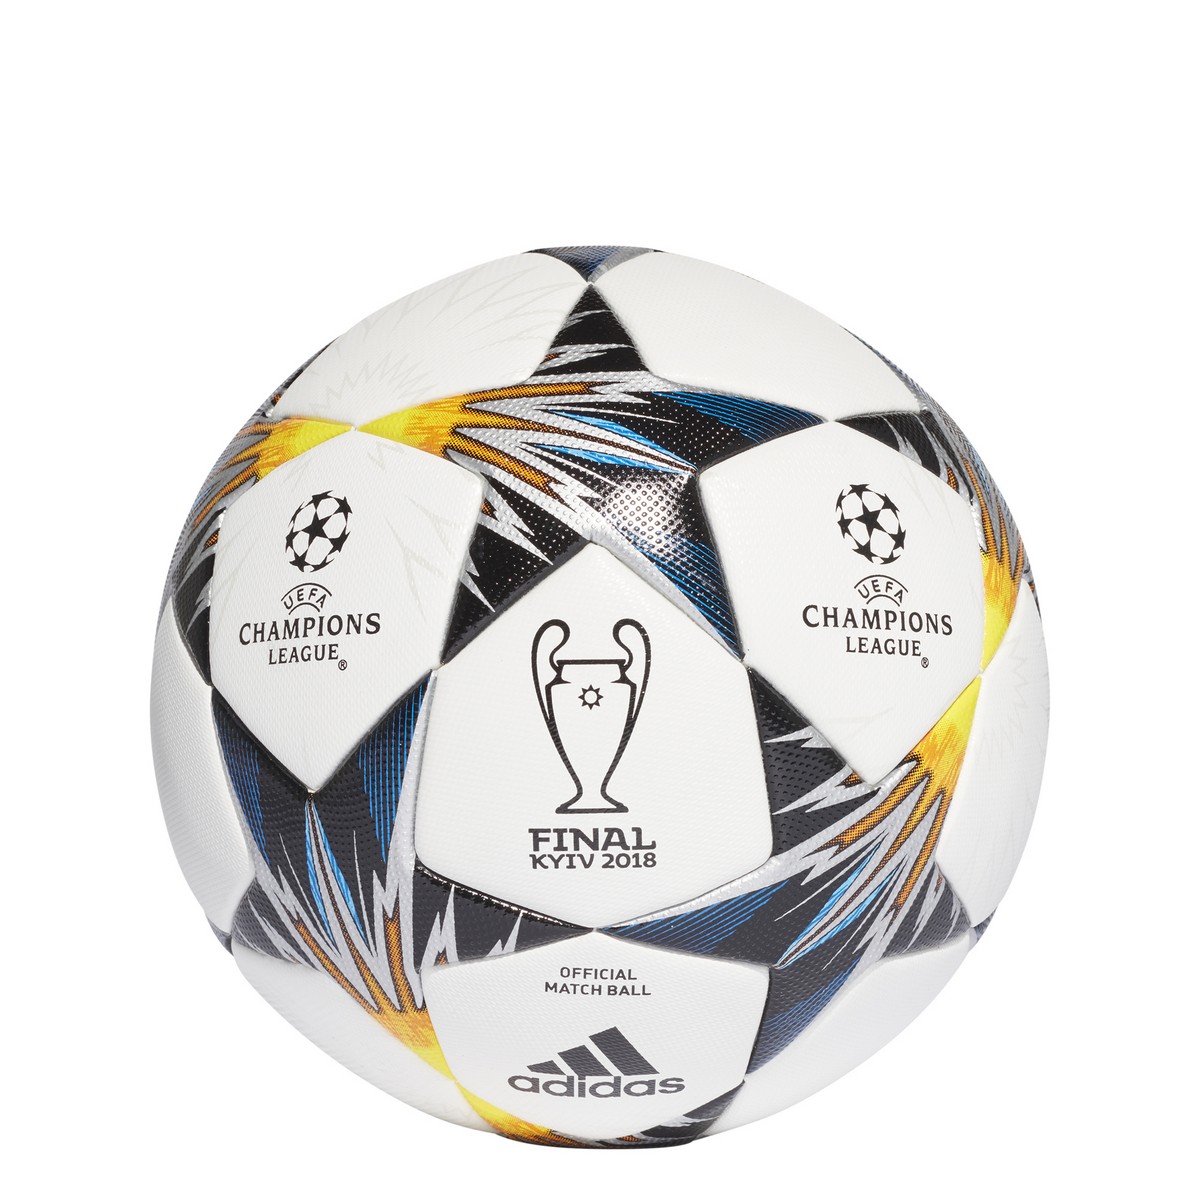 Adidas Ball final Champions League 2017/18 KIEV